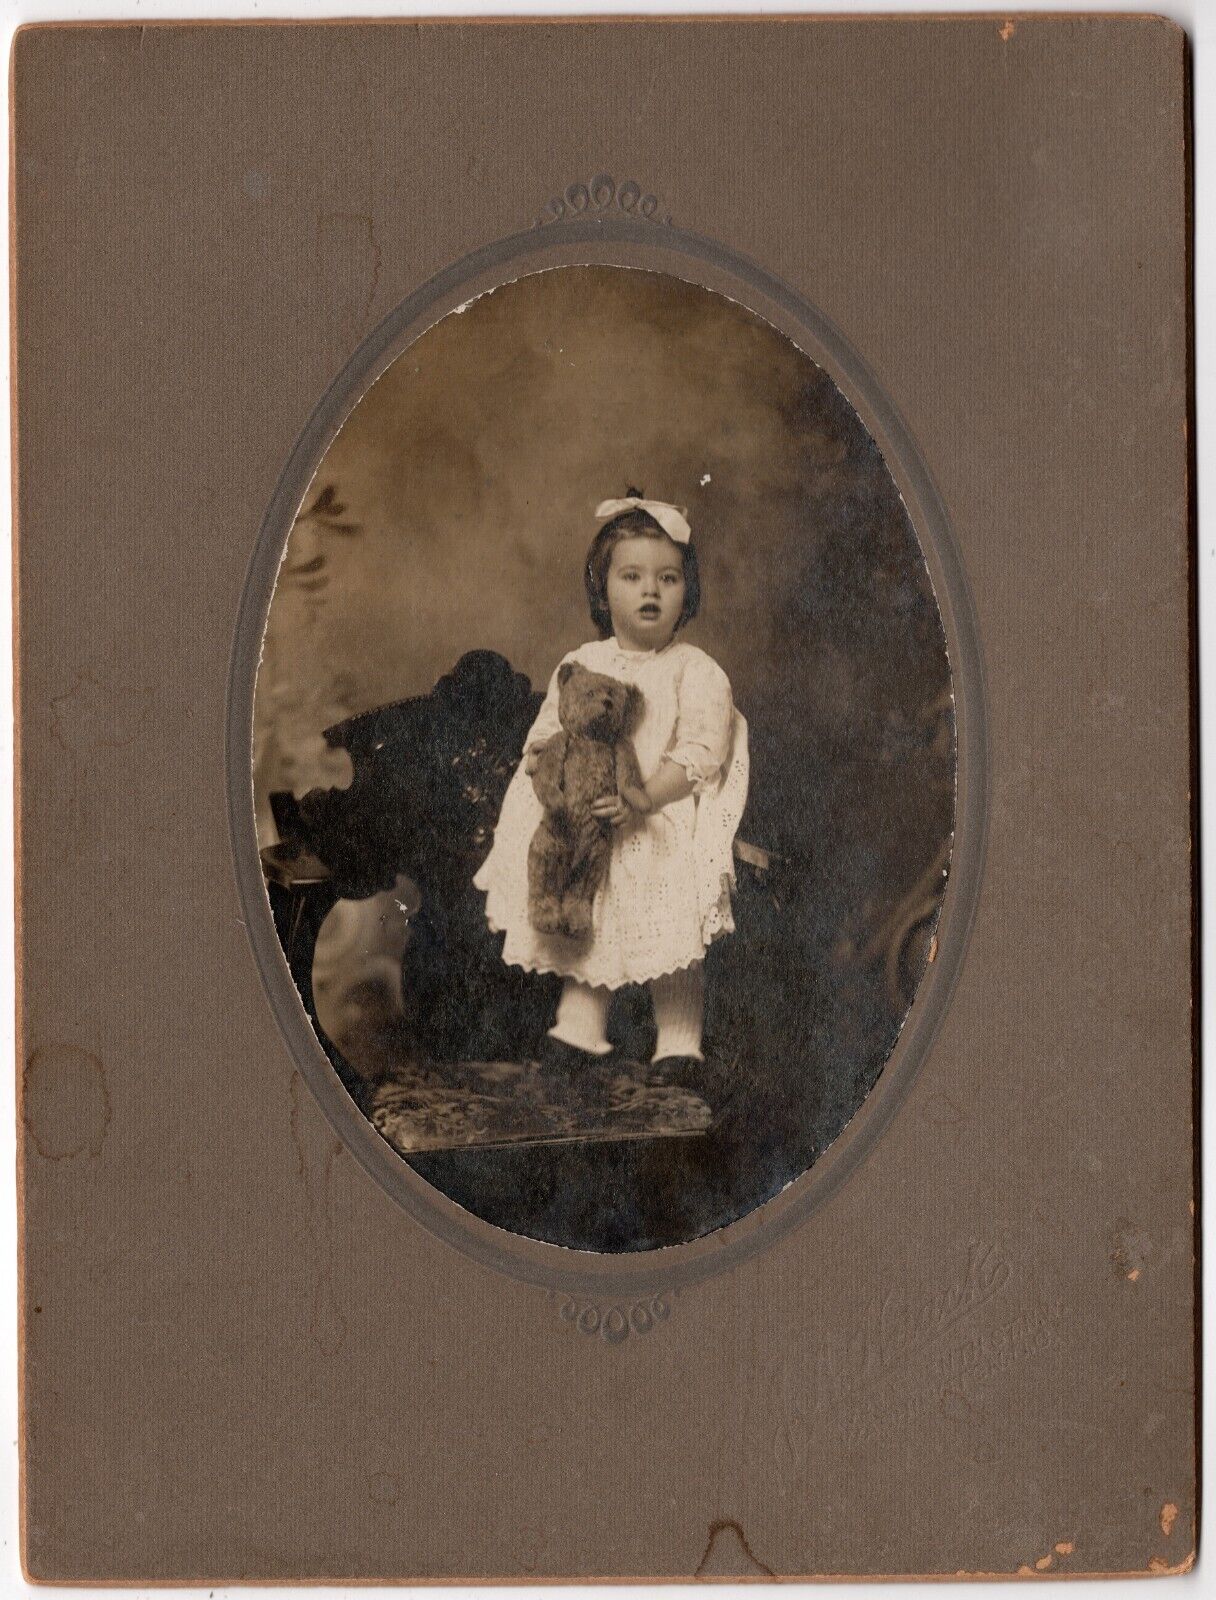 C. 1890s MOUNTED BOARD PHOTO CUTE LITTLE GIRL HOLDING TEDDY BEAR WASHINGTON D.C.